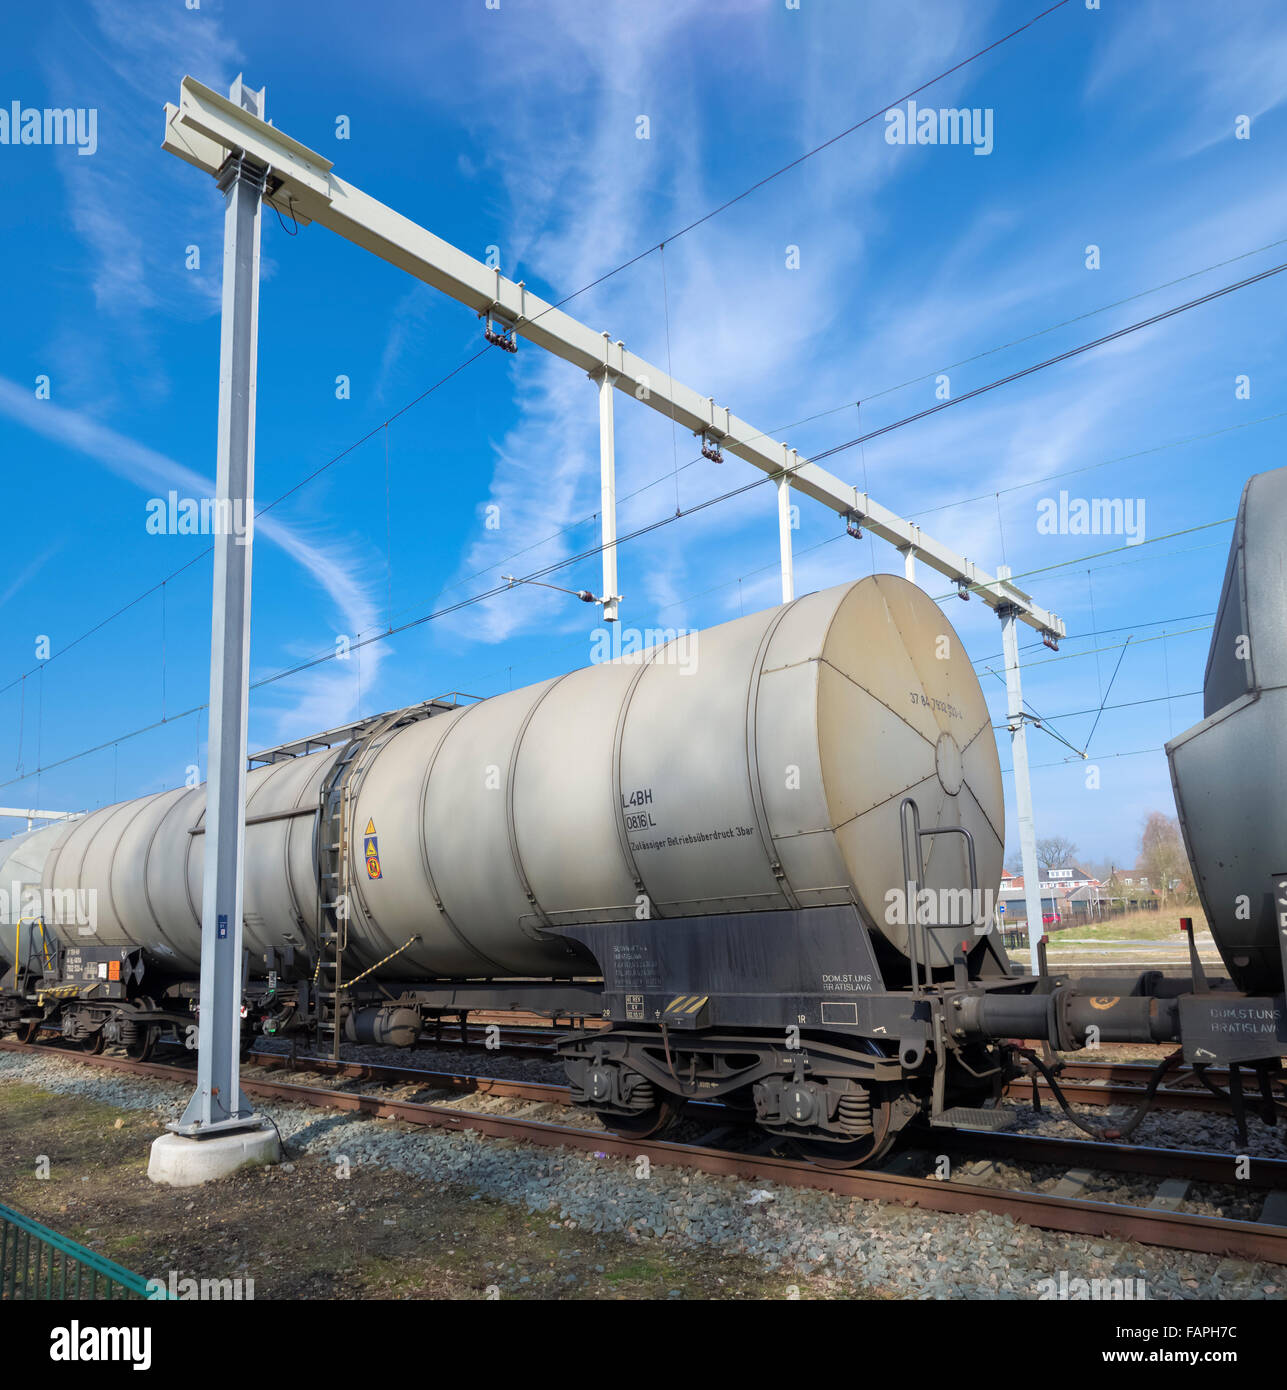 train waggon for liquids like petrol or oil Stock Photo